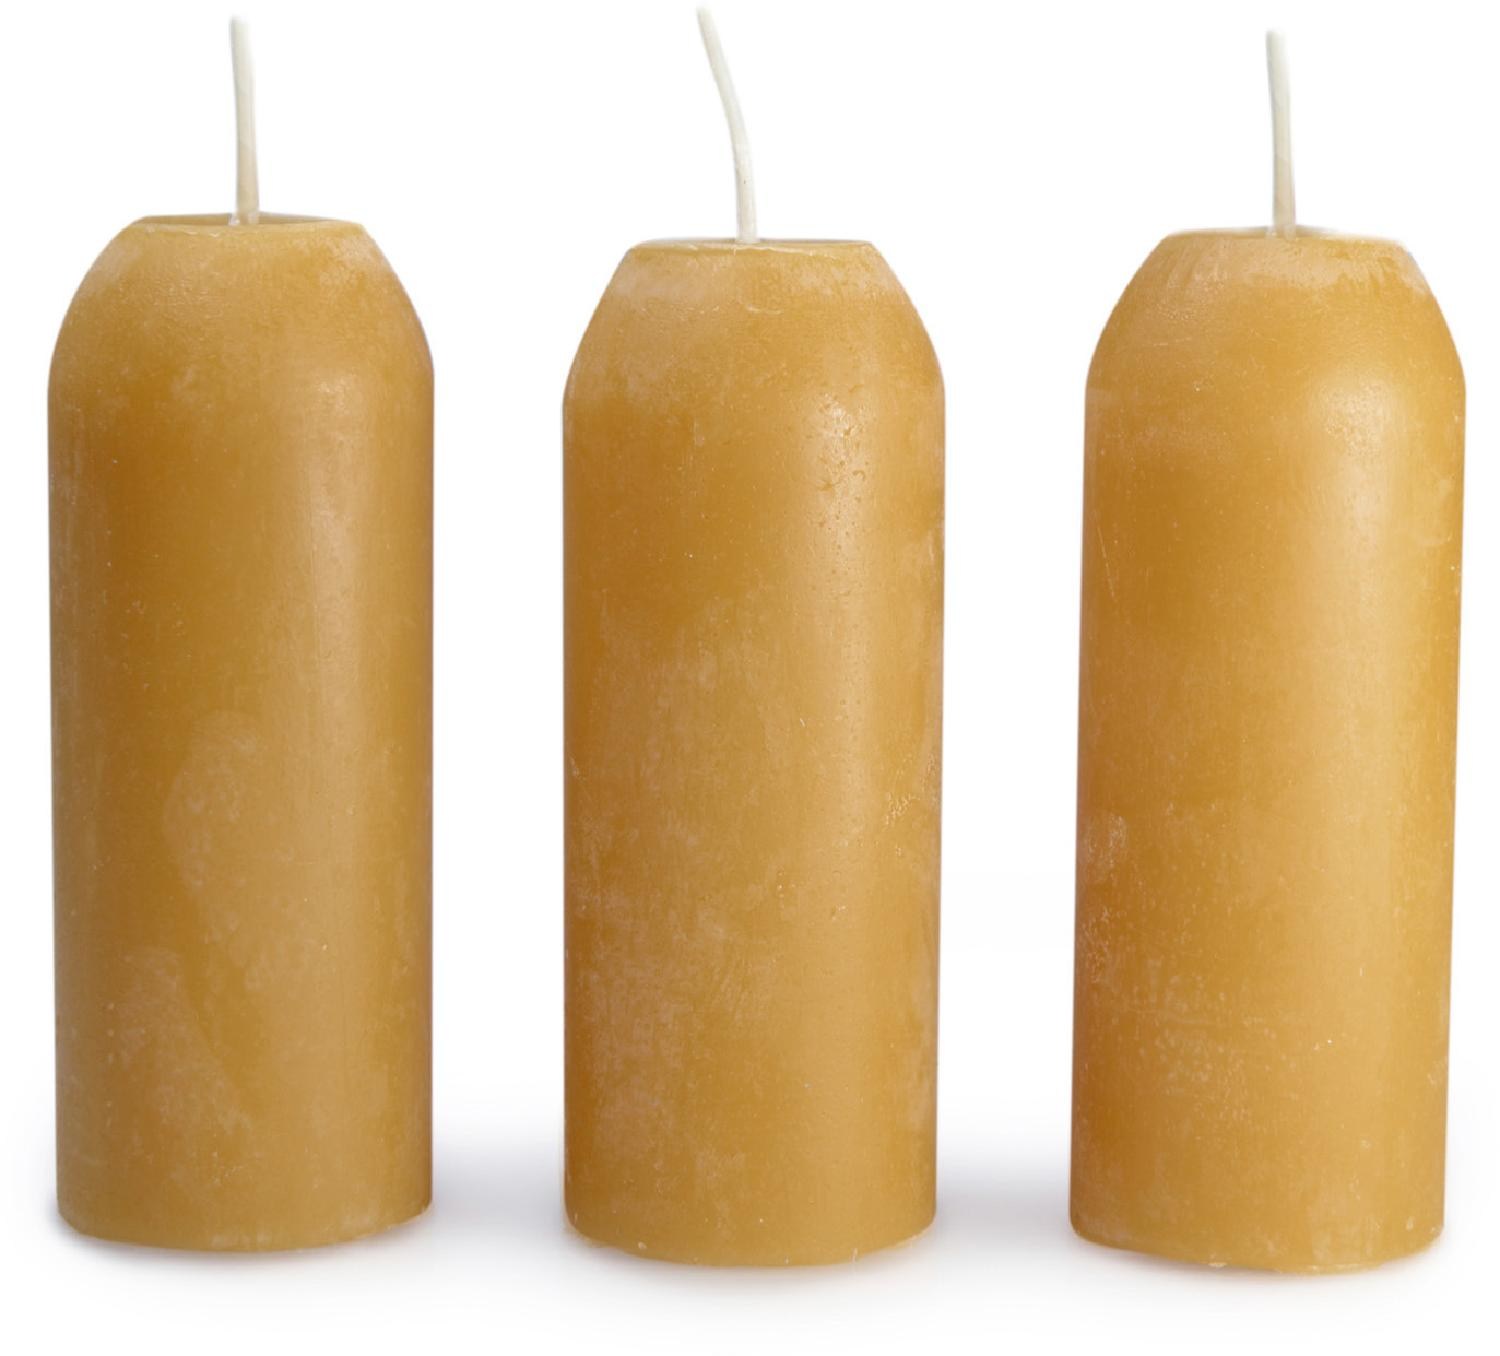 Свечи Candle Lantern из пчелиного воска — упаковка из 3 шт. UCO wally s natural ушные свечи из пчелиного воска коллекция luxury без запаха 12 свечей